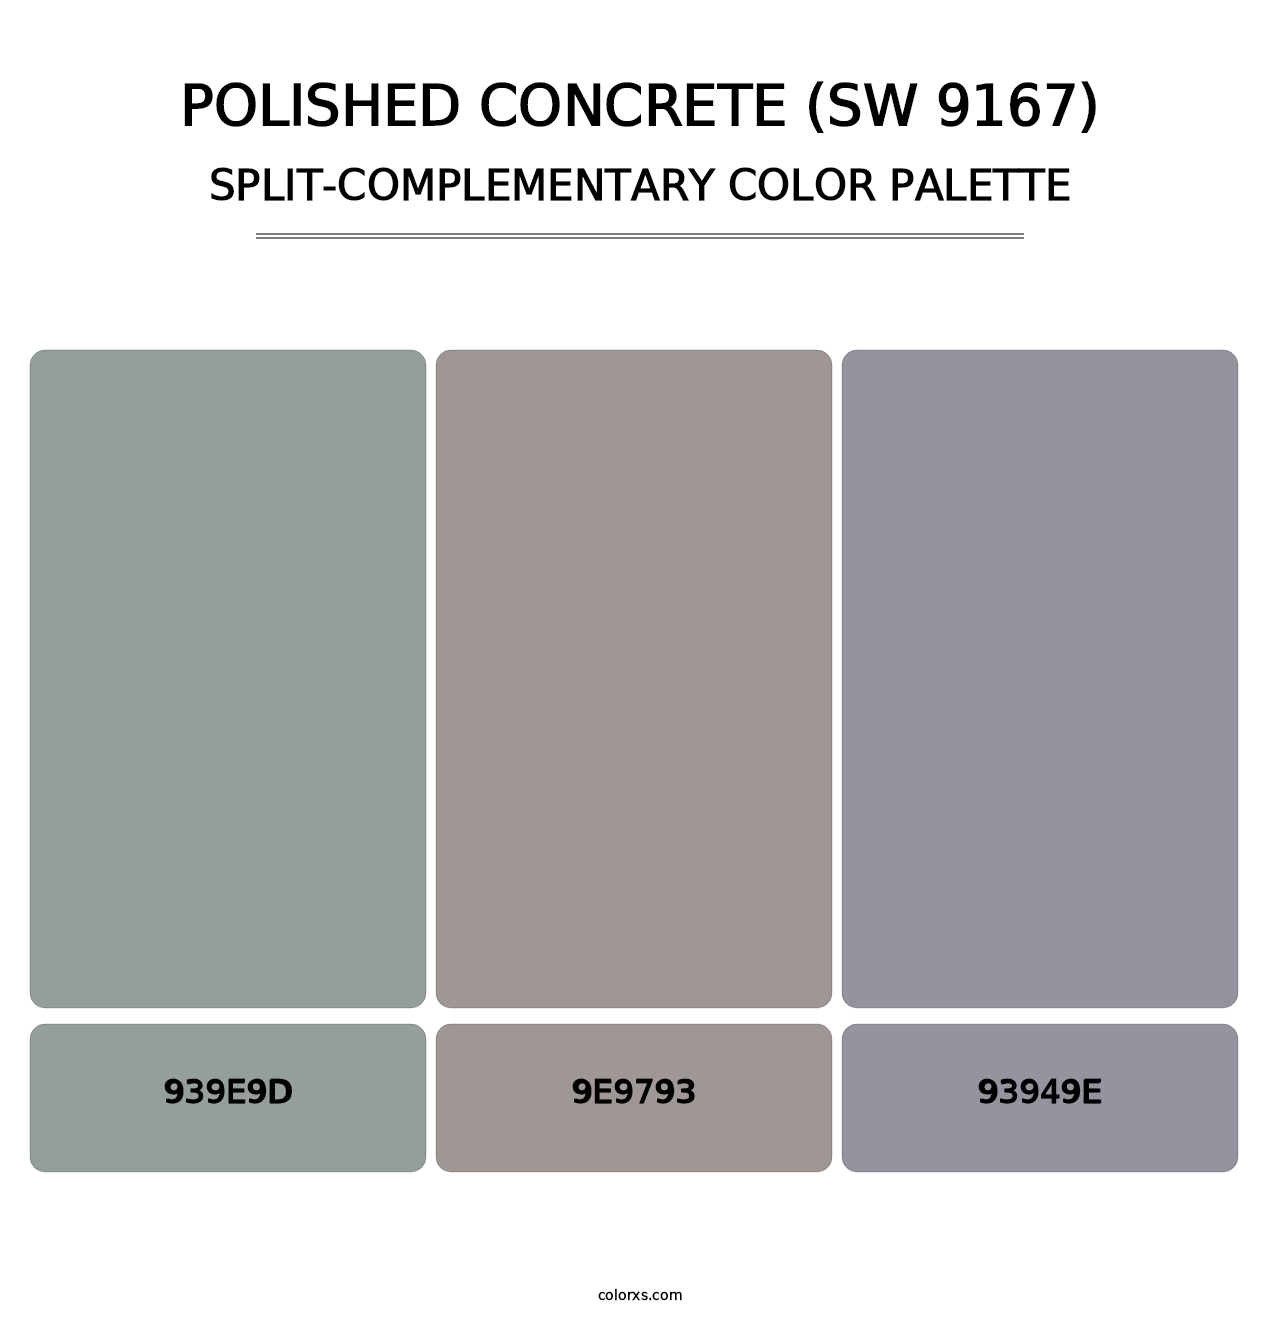 Polished Concrete (SW 9167) - Split-Complementary Color Palette